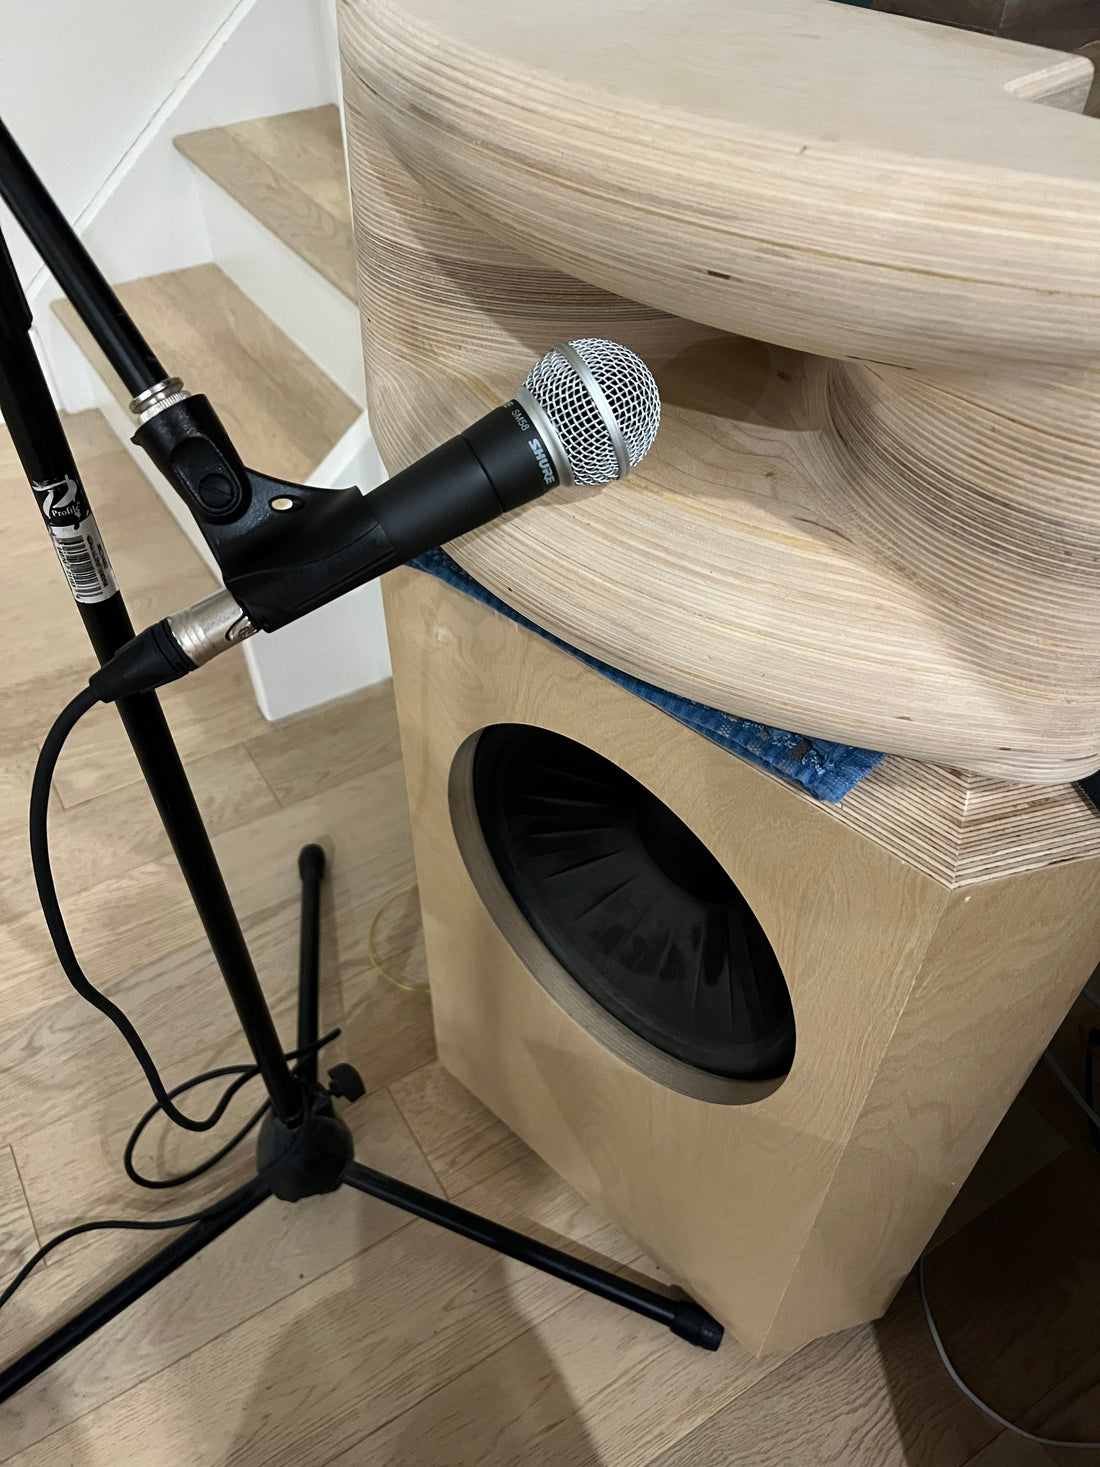 Shure SM58 Dynamic Microphone for Loudspeaker Measurement